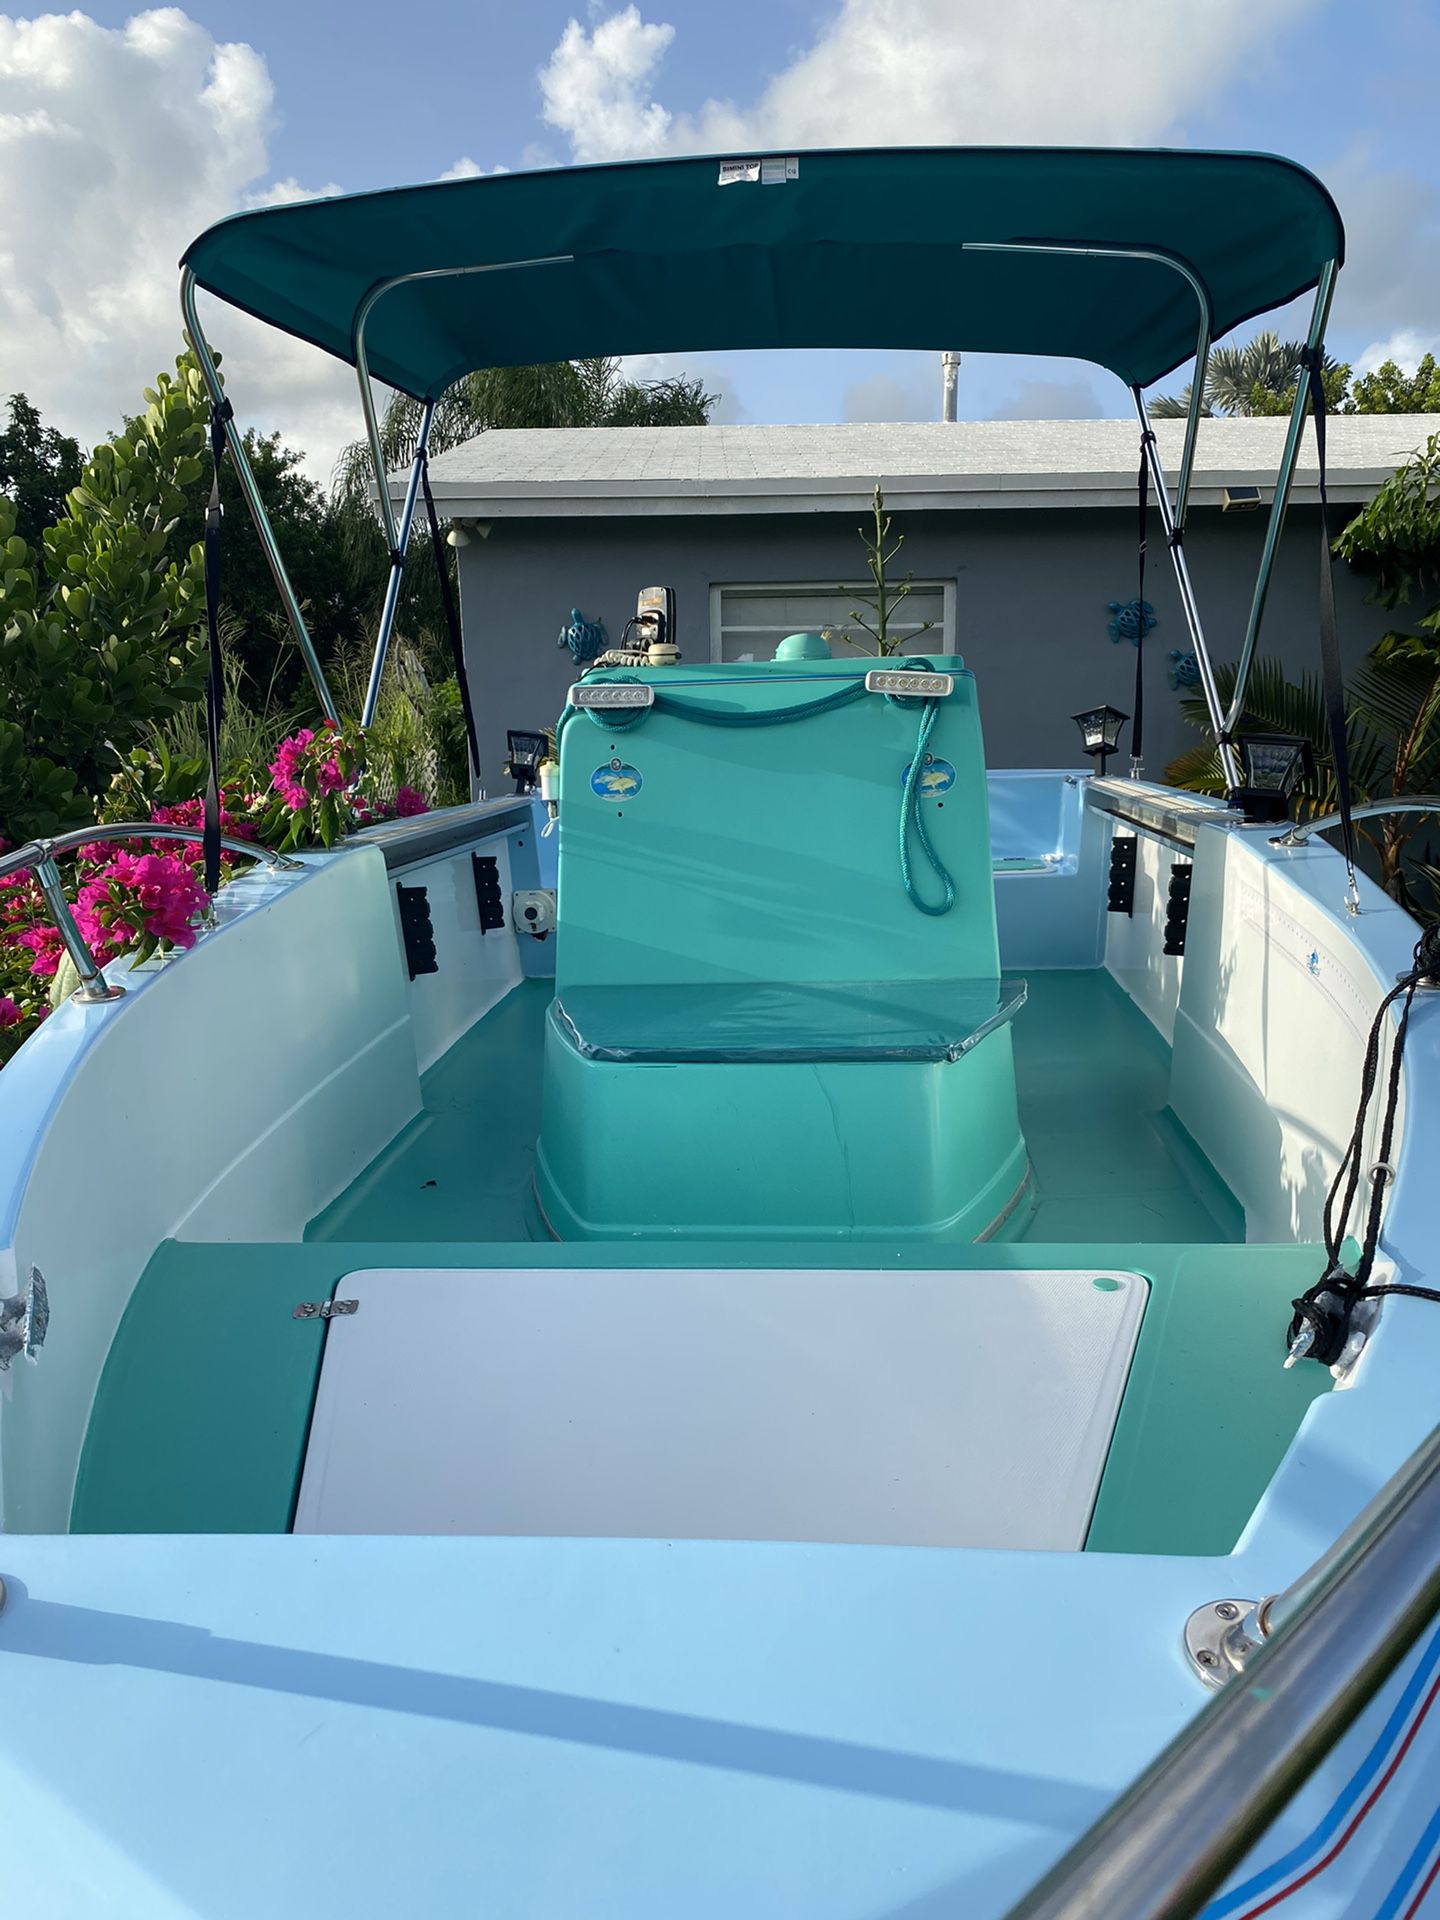 Boat 17 ft”Bayliner” motor 85 everything working